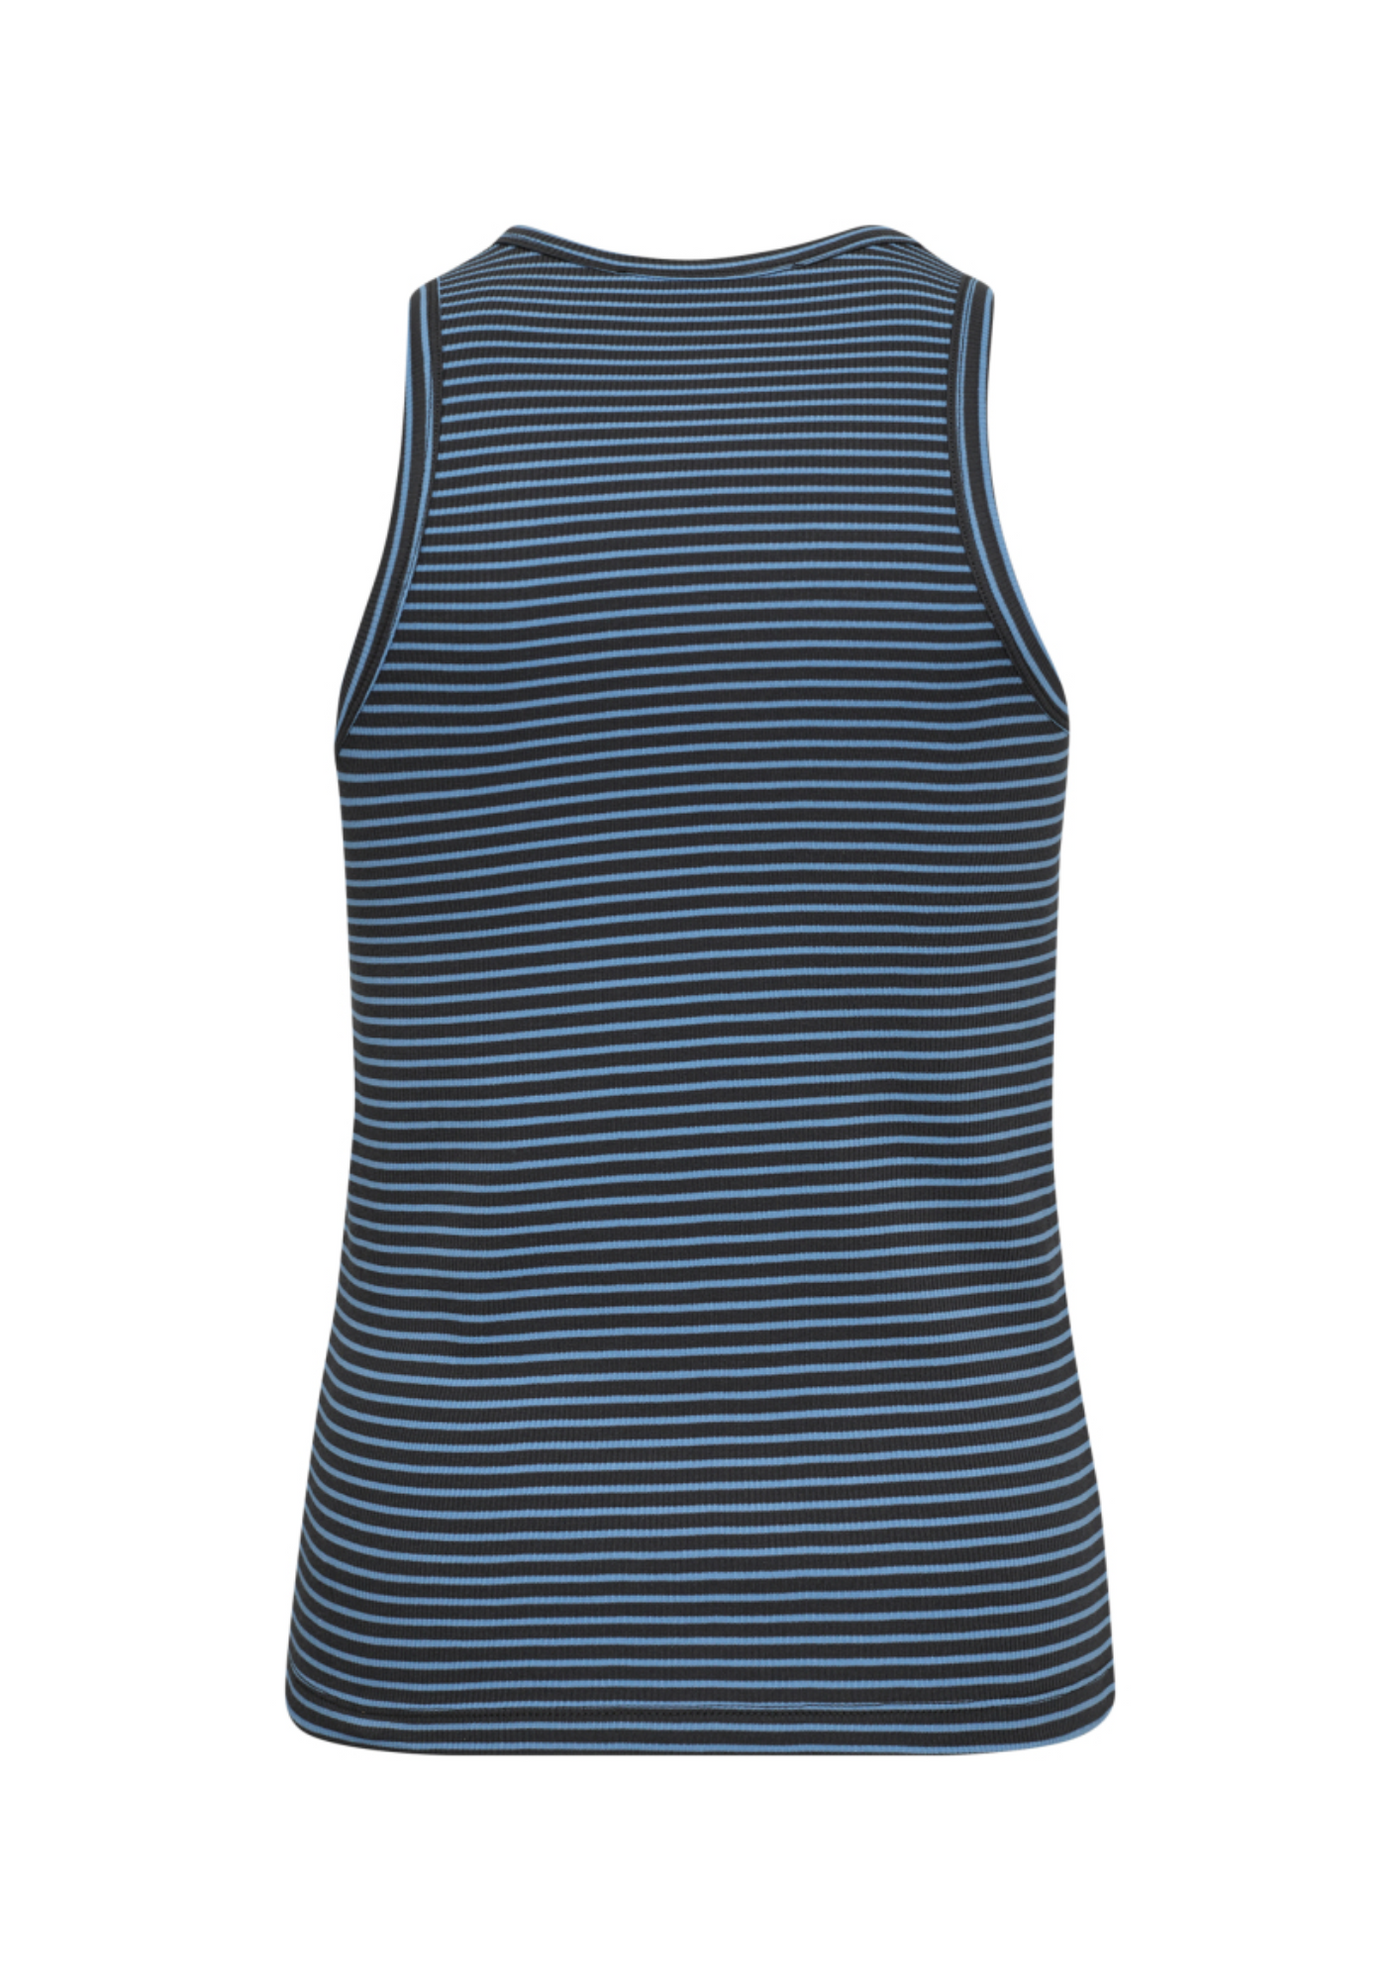 Co' Couture | SaraCC Stripe Rib Top Blue